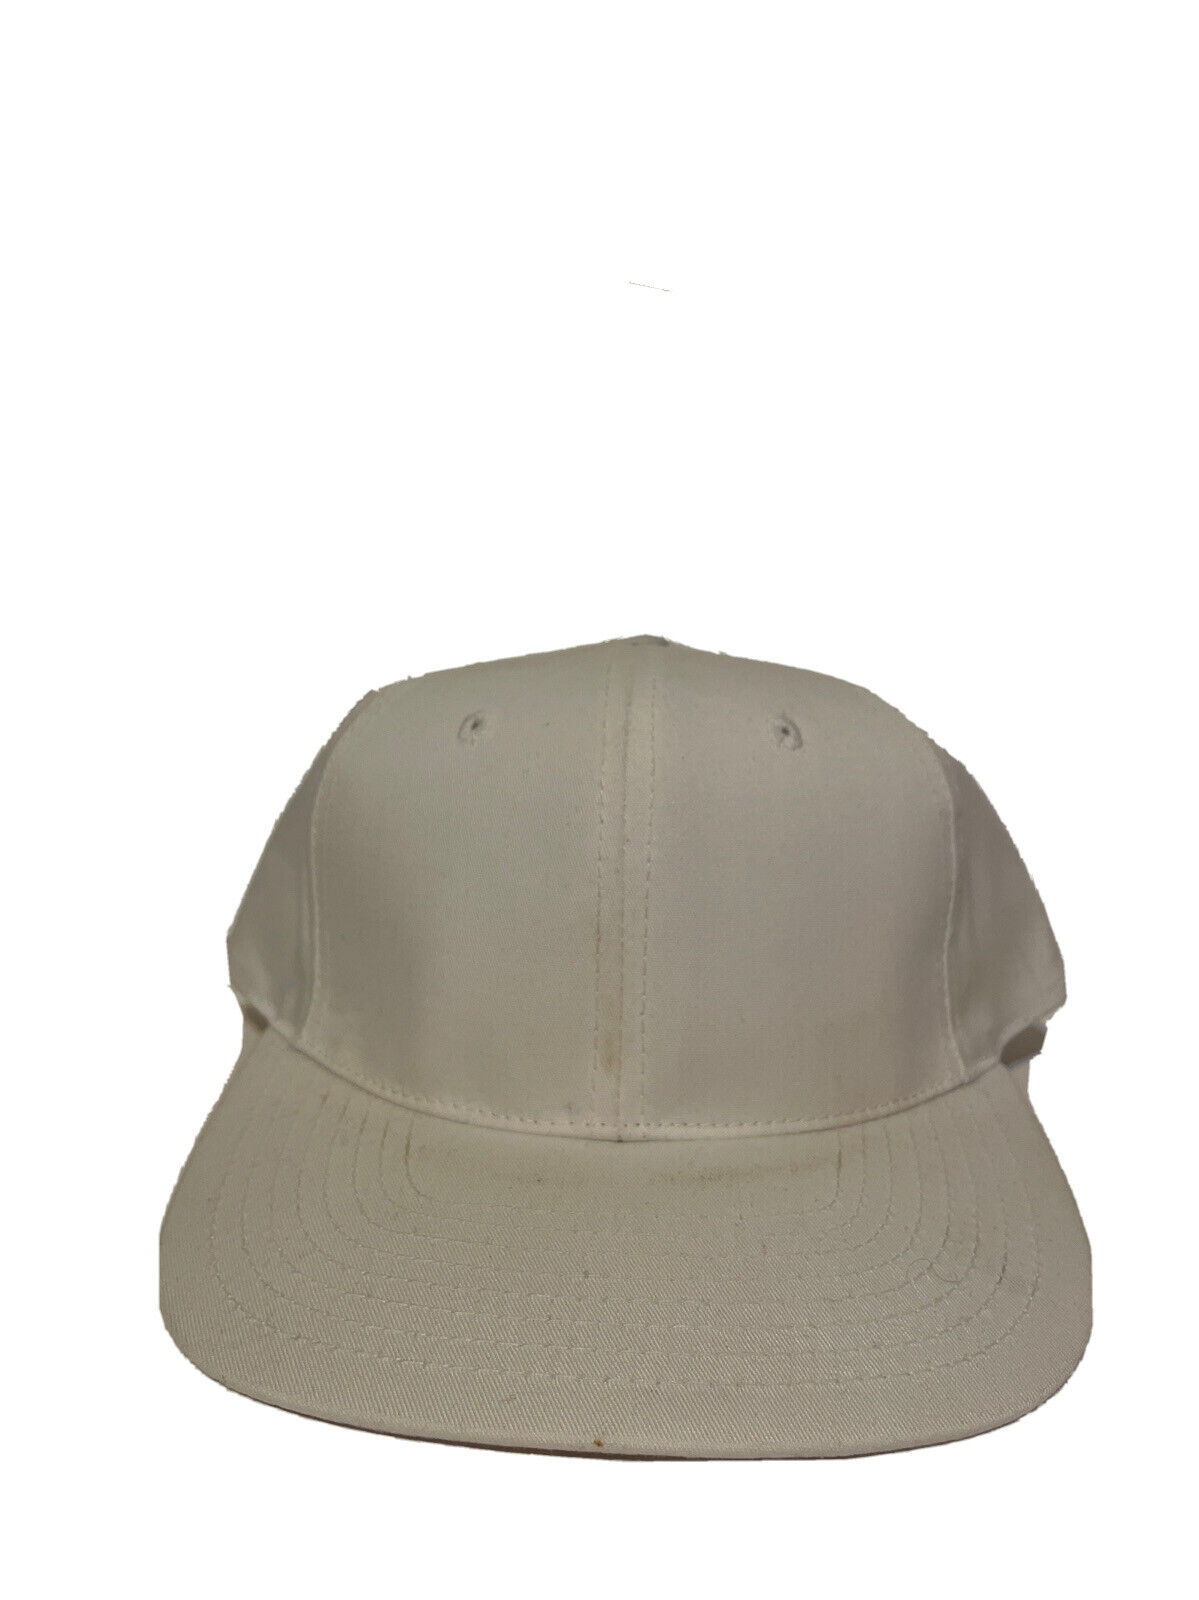 Vintage G.C.C White Blank SnapBack Hat 90’s